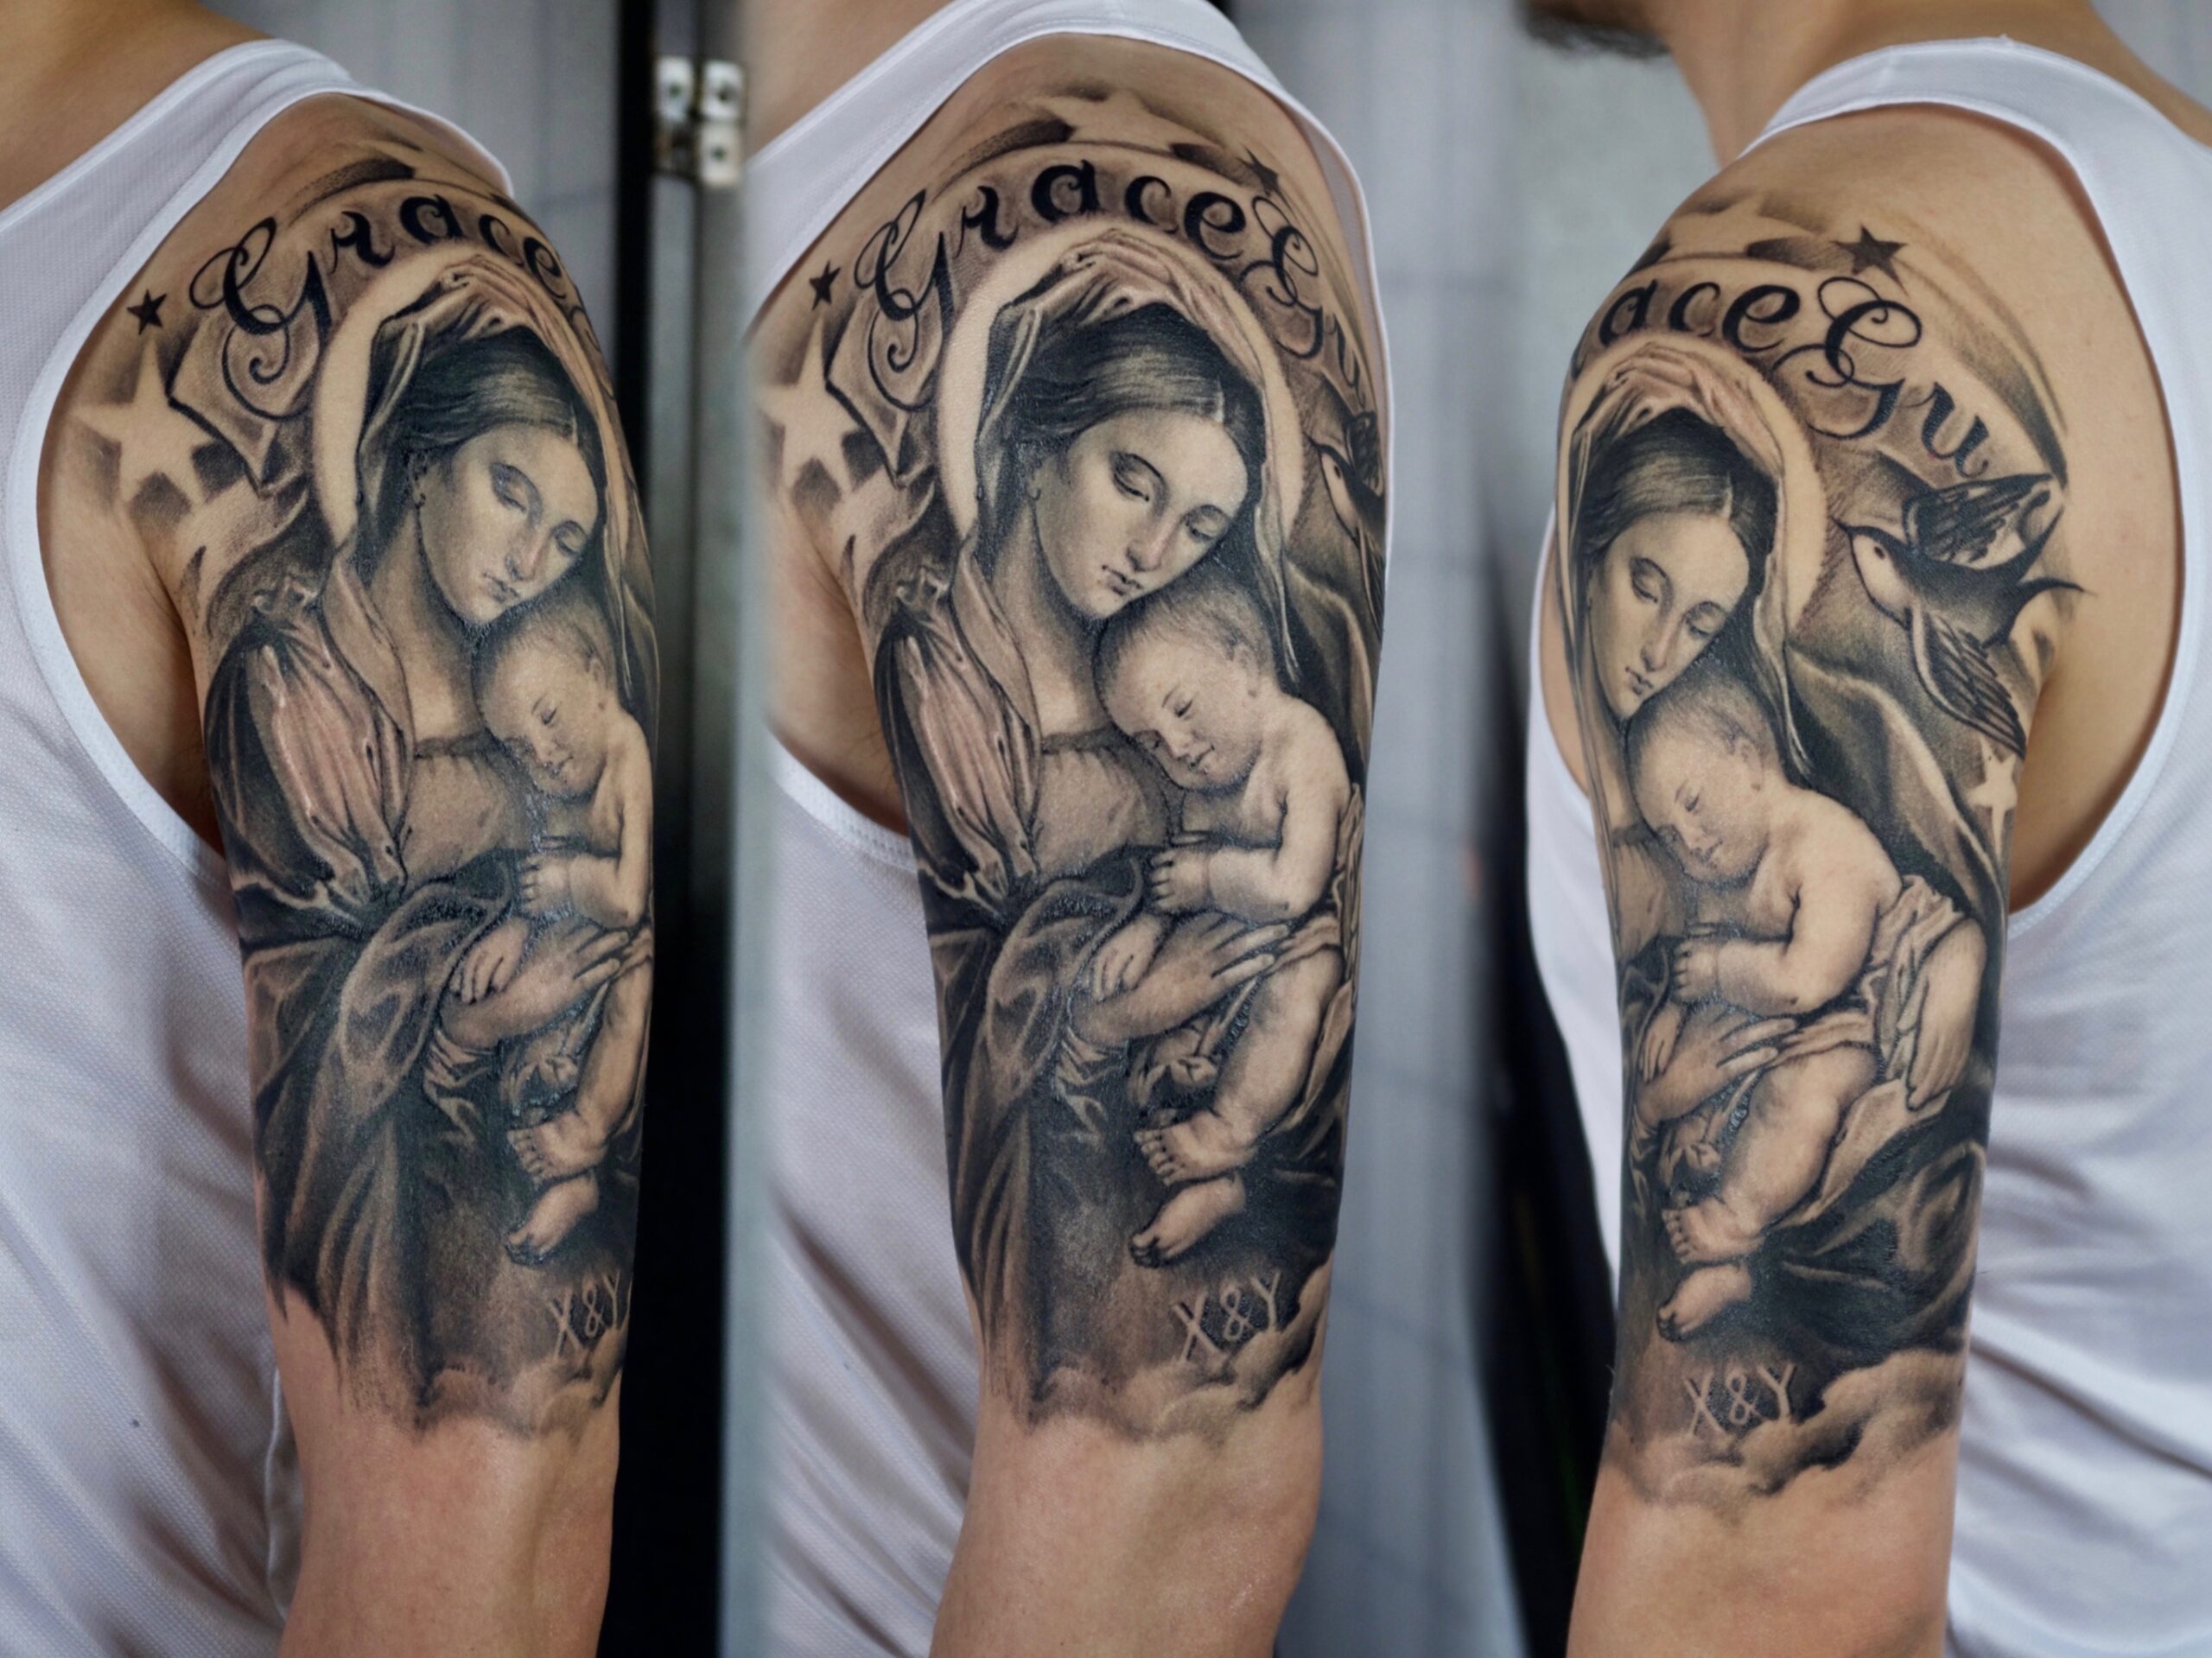 zhuo dan ting tattoo work 卓丹婷纹身作品 圣母玛丽亚纹身 1